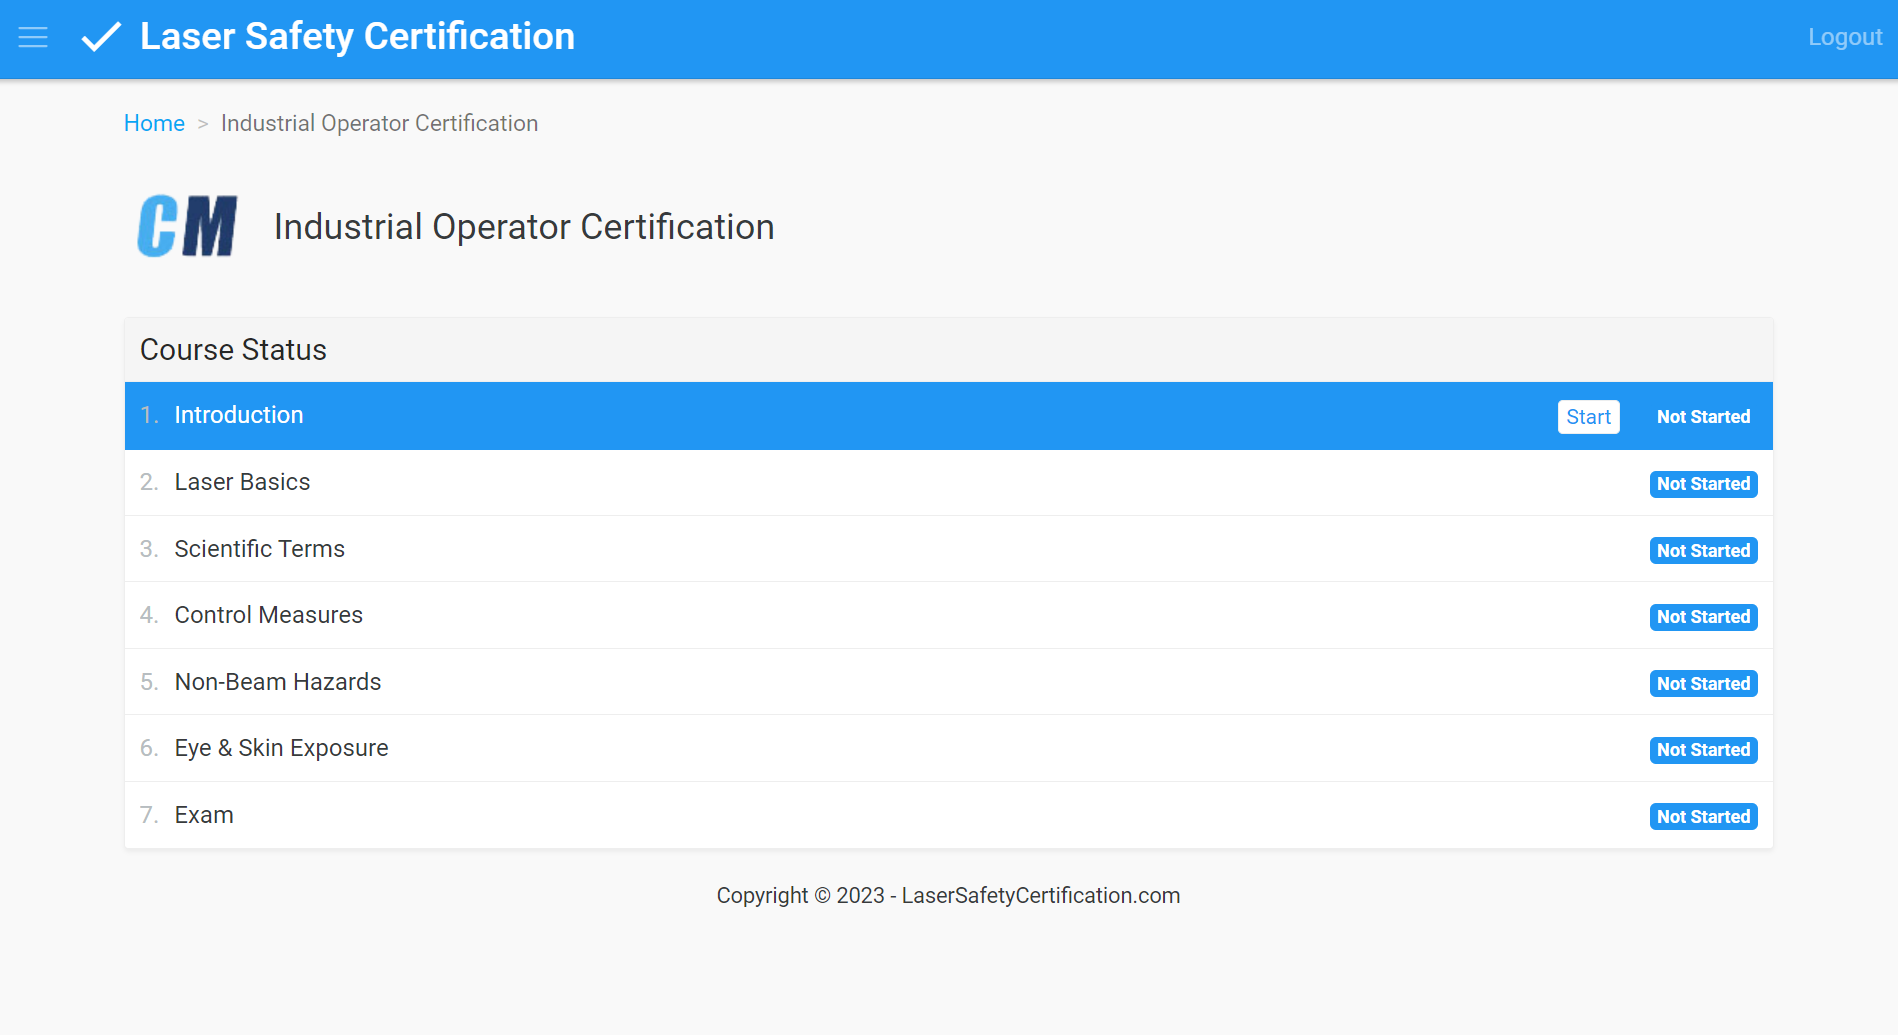 A screenshot of the industrial operator certification screen.